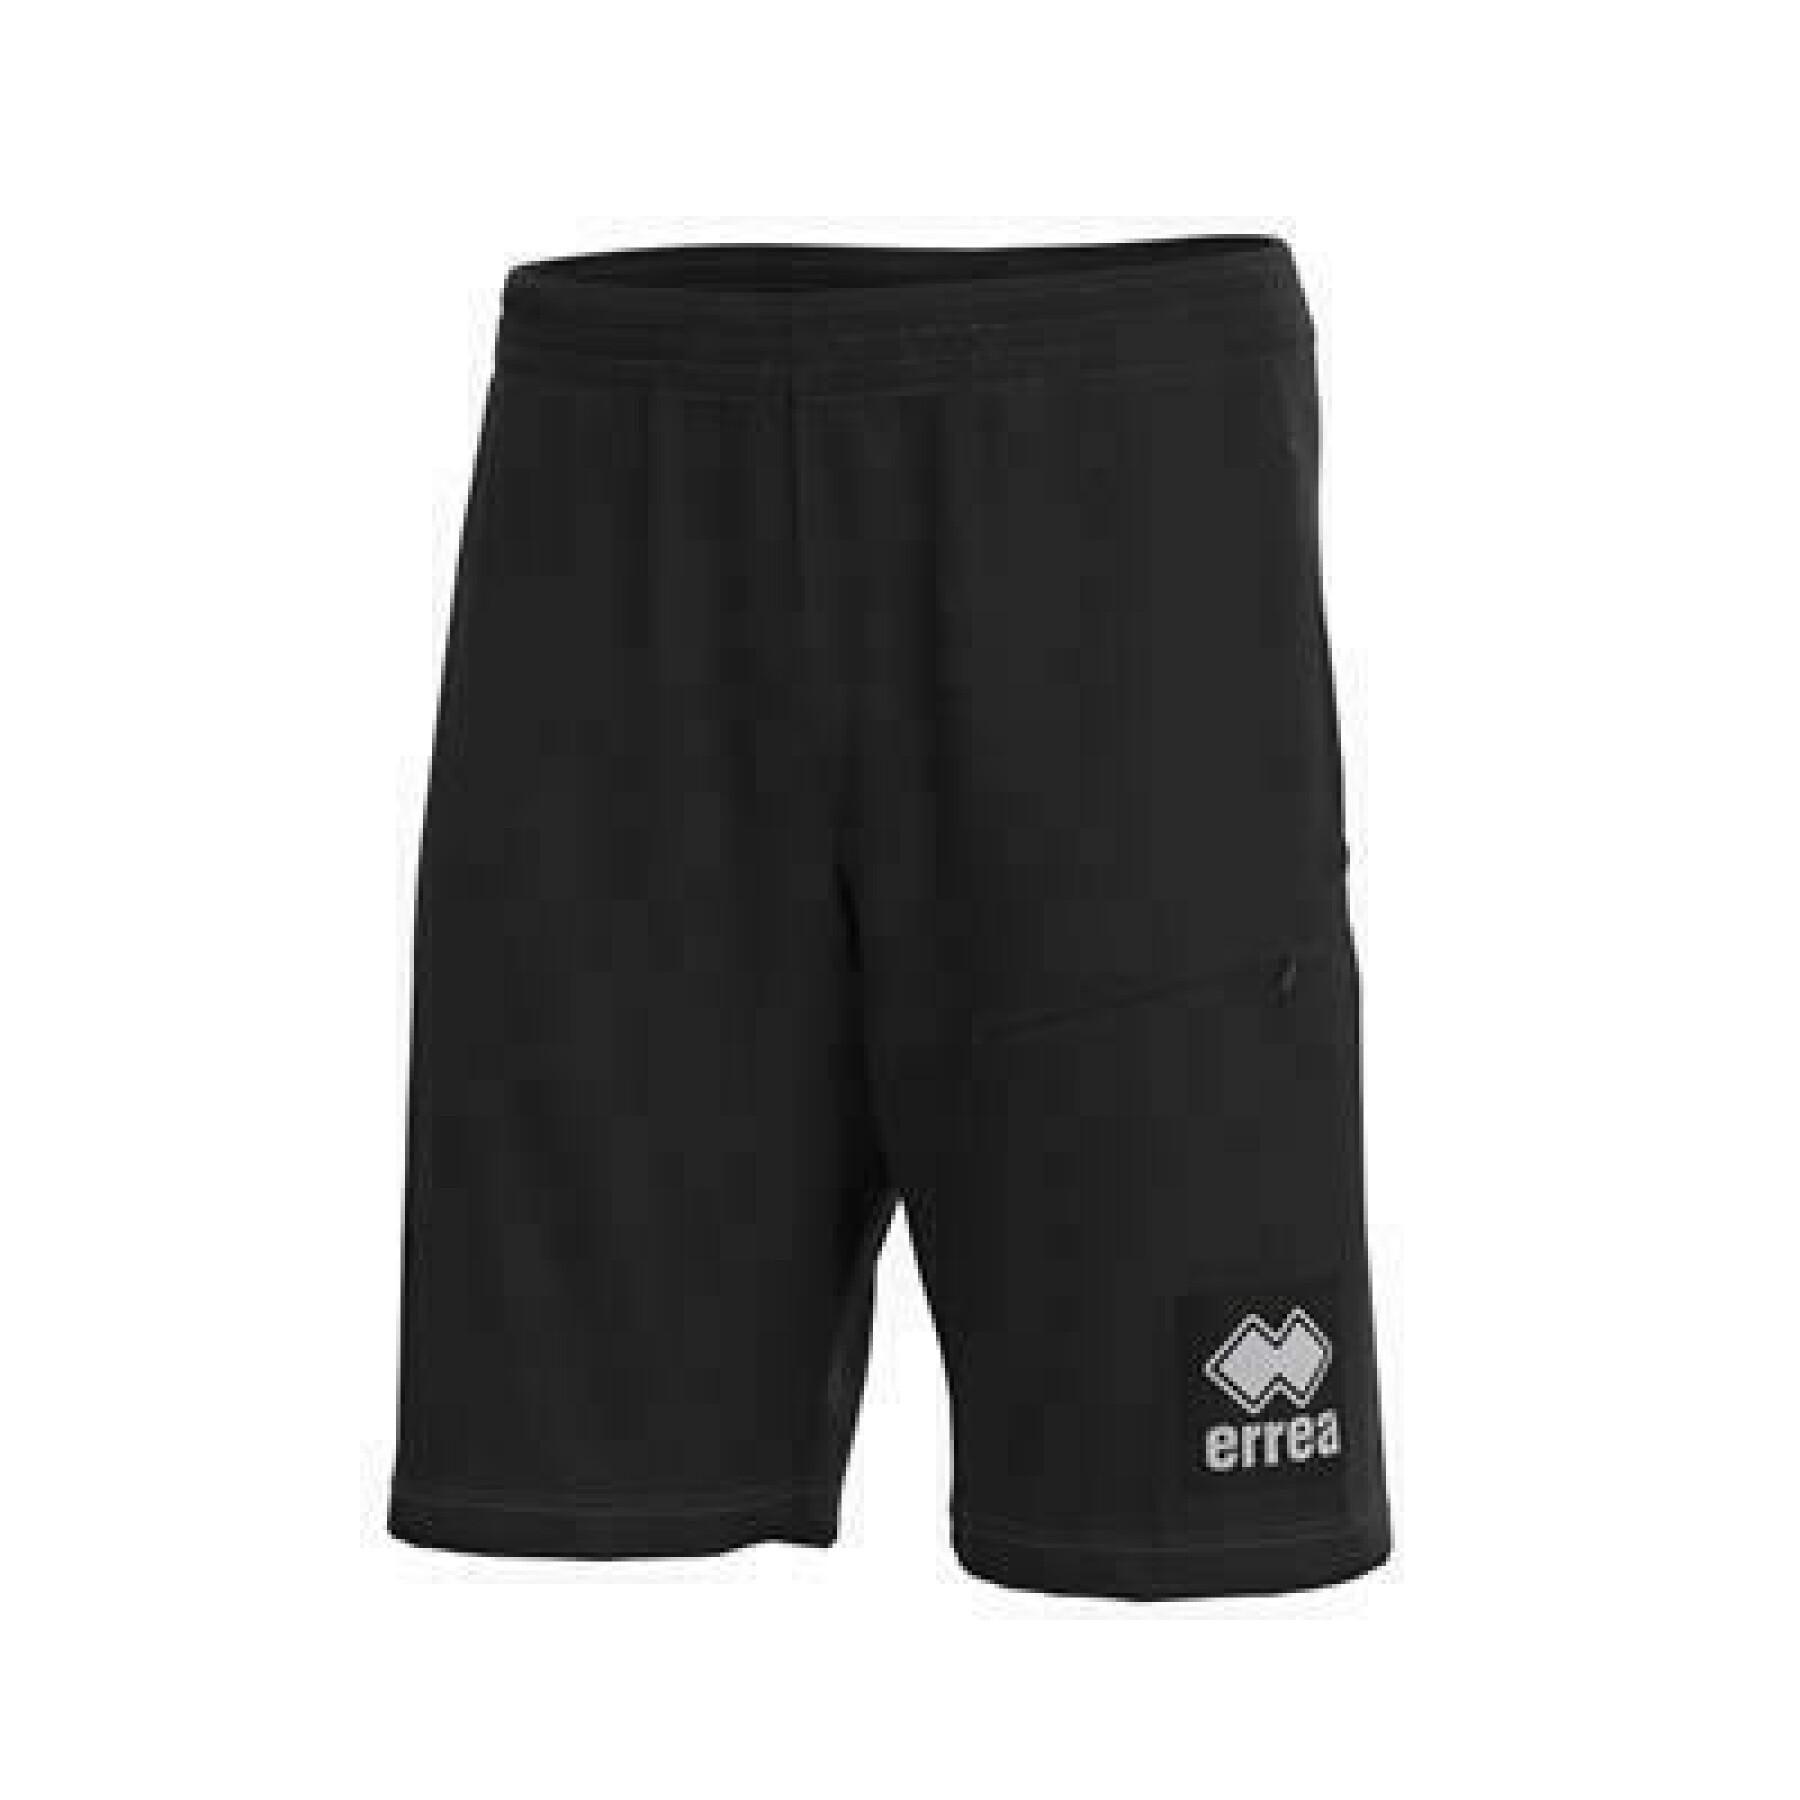 Pantalones cortos para correr Errea Black box 2022 I See You